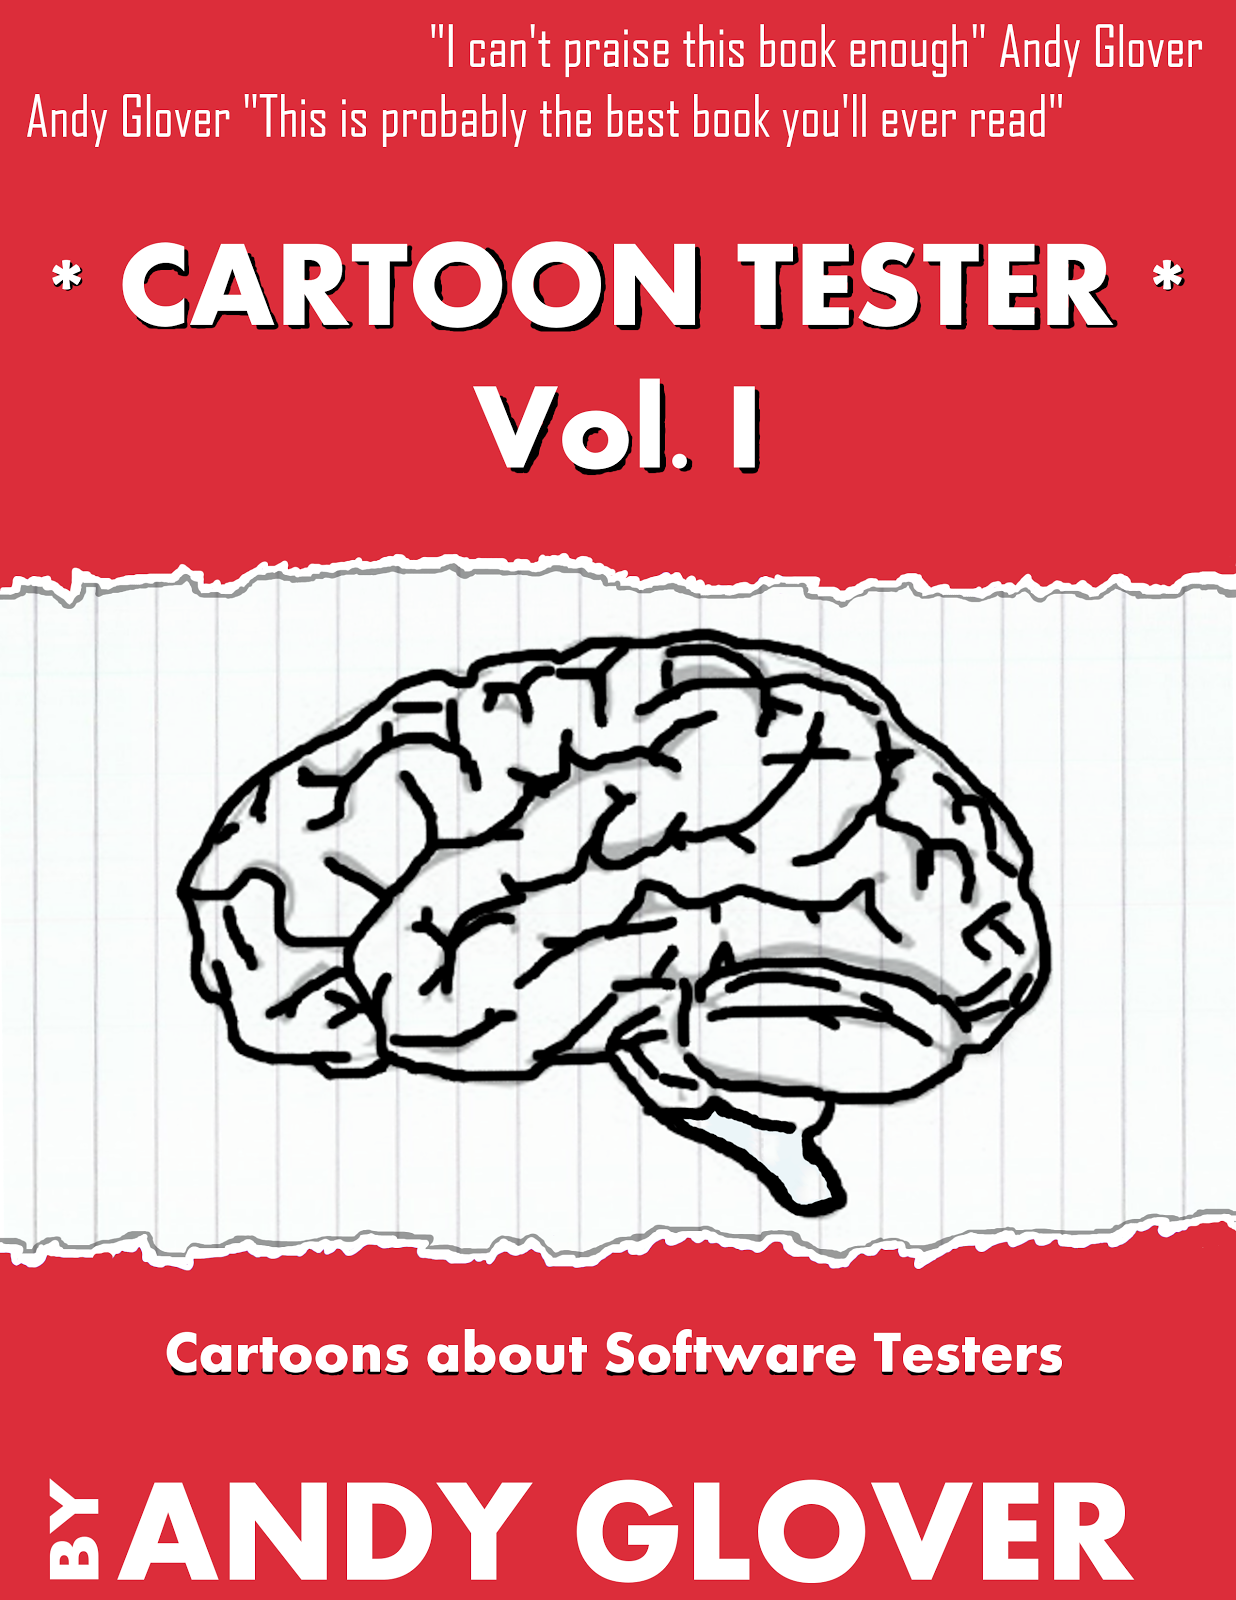 The Cartoon Tester Book